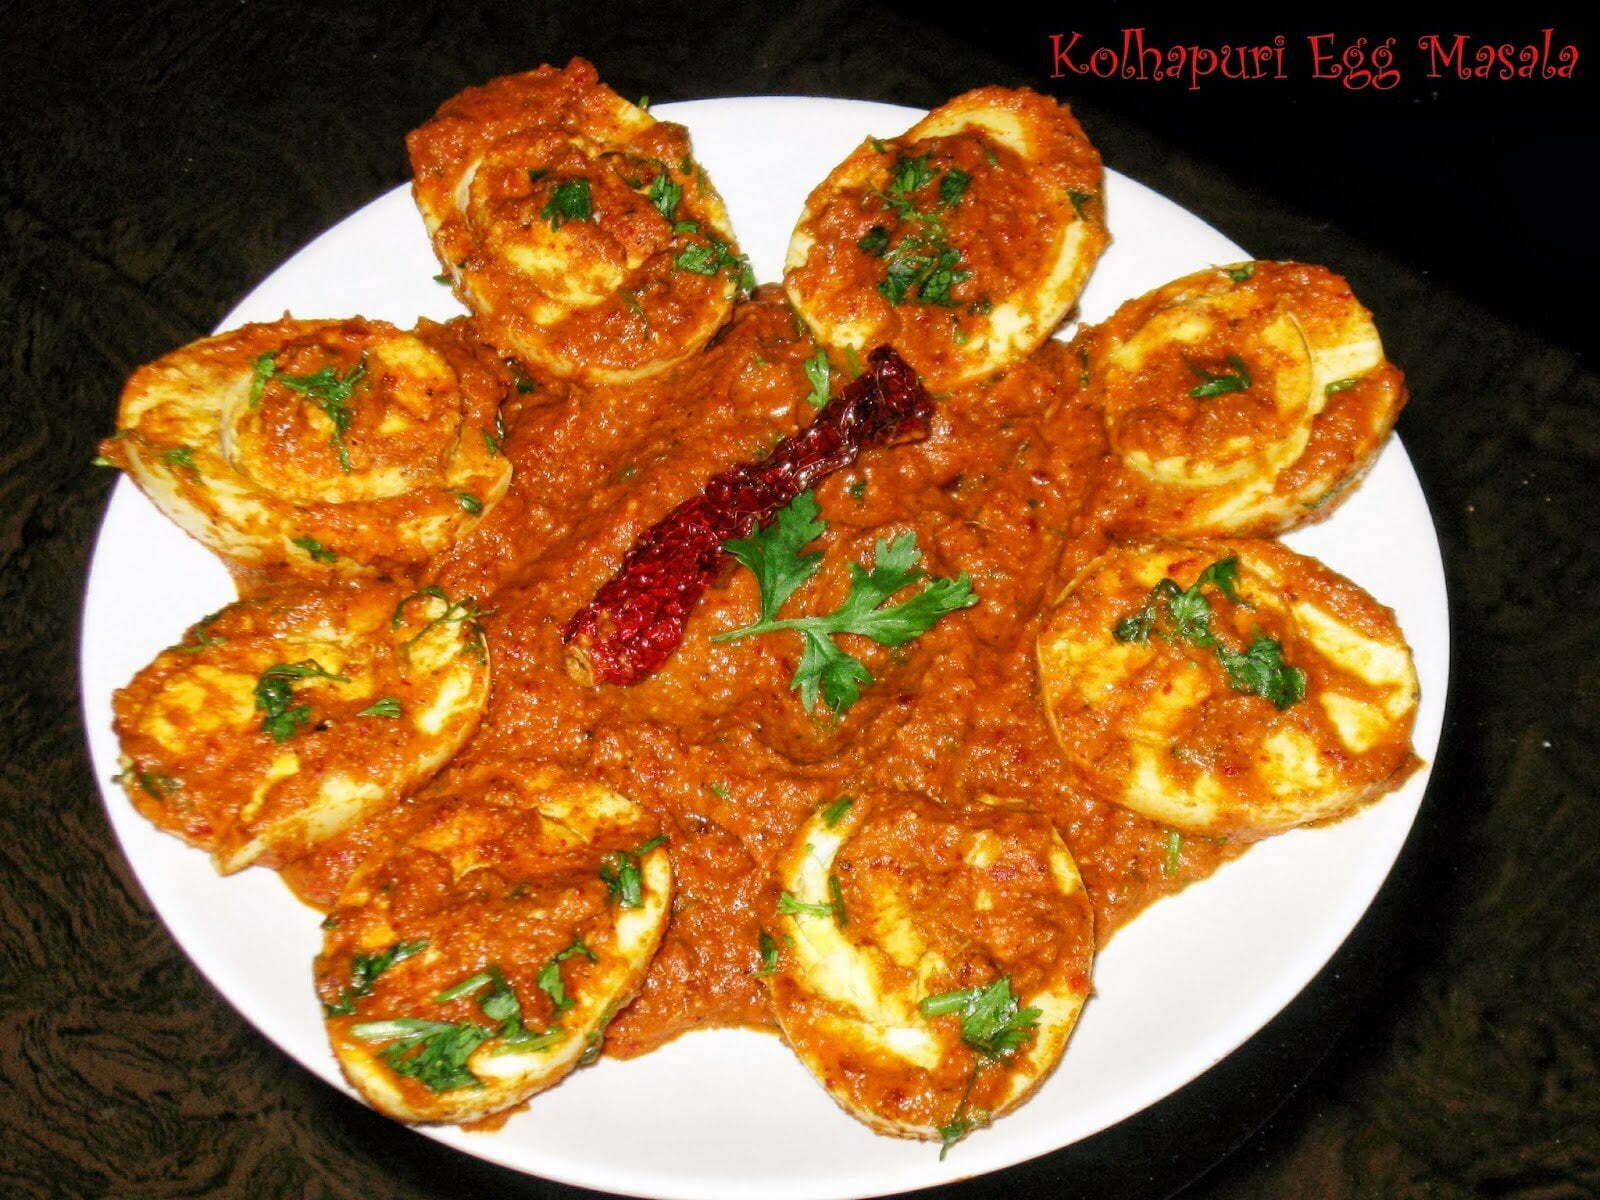 Kolhapuri Egg Masala